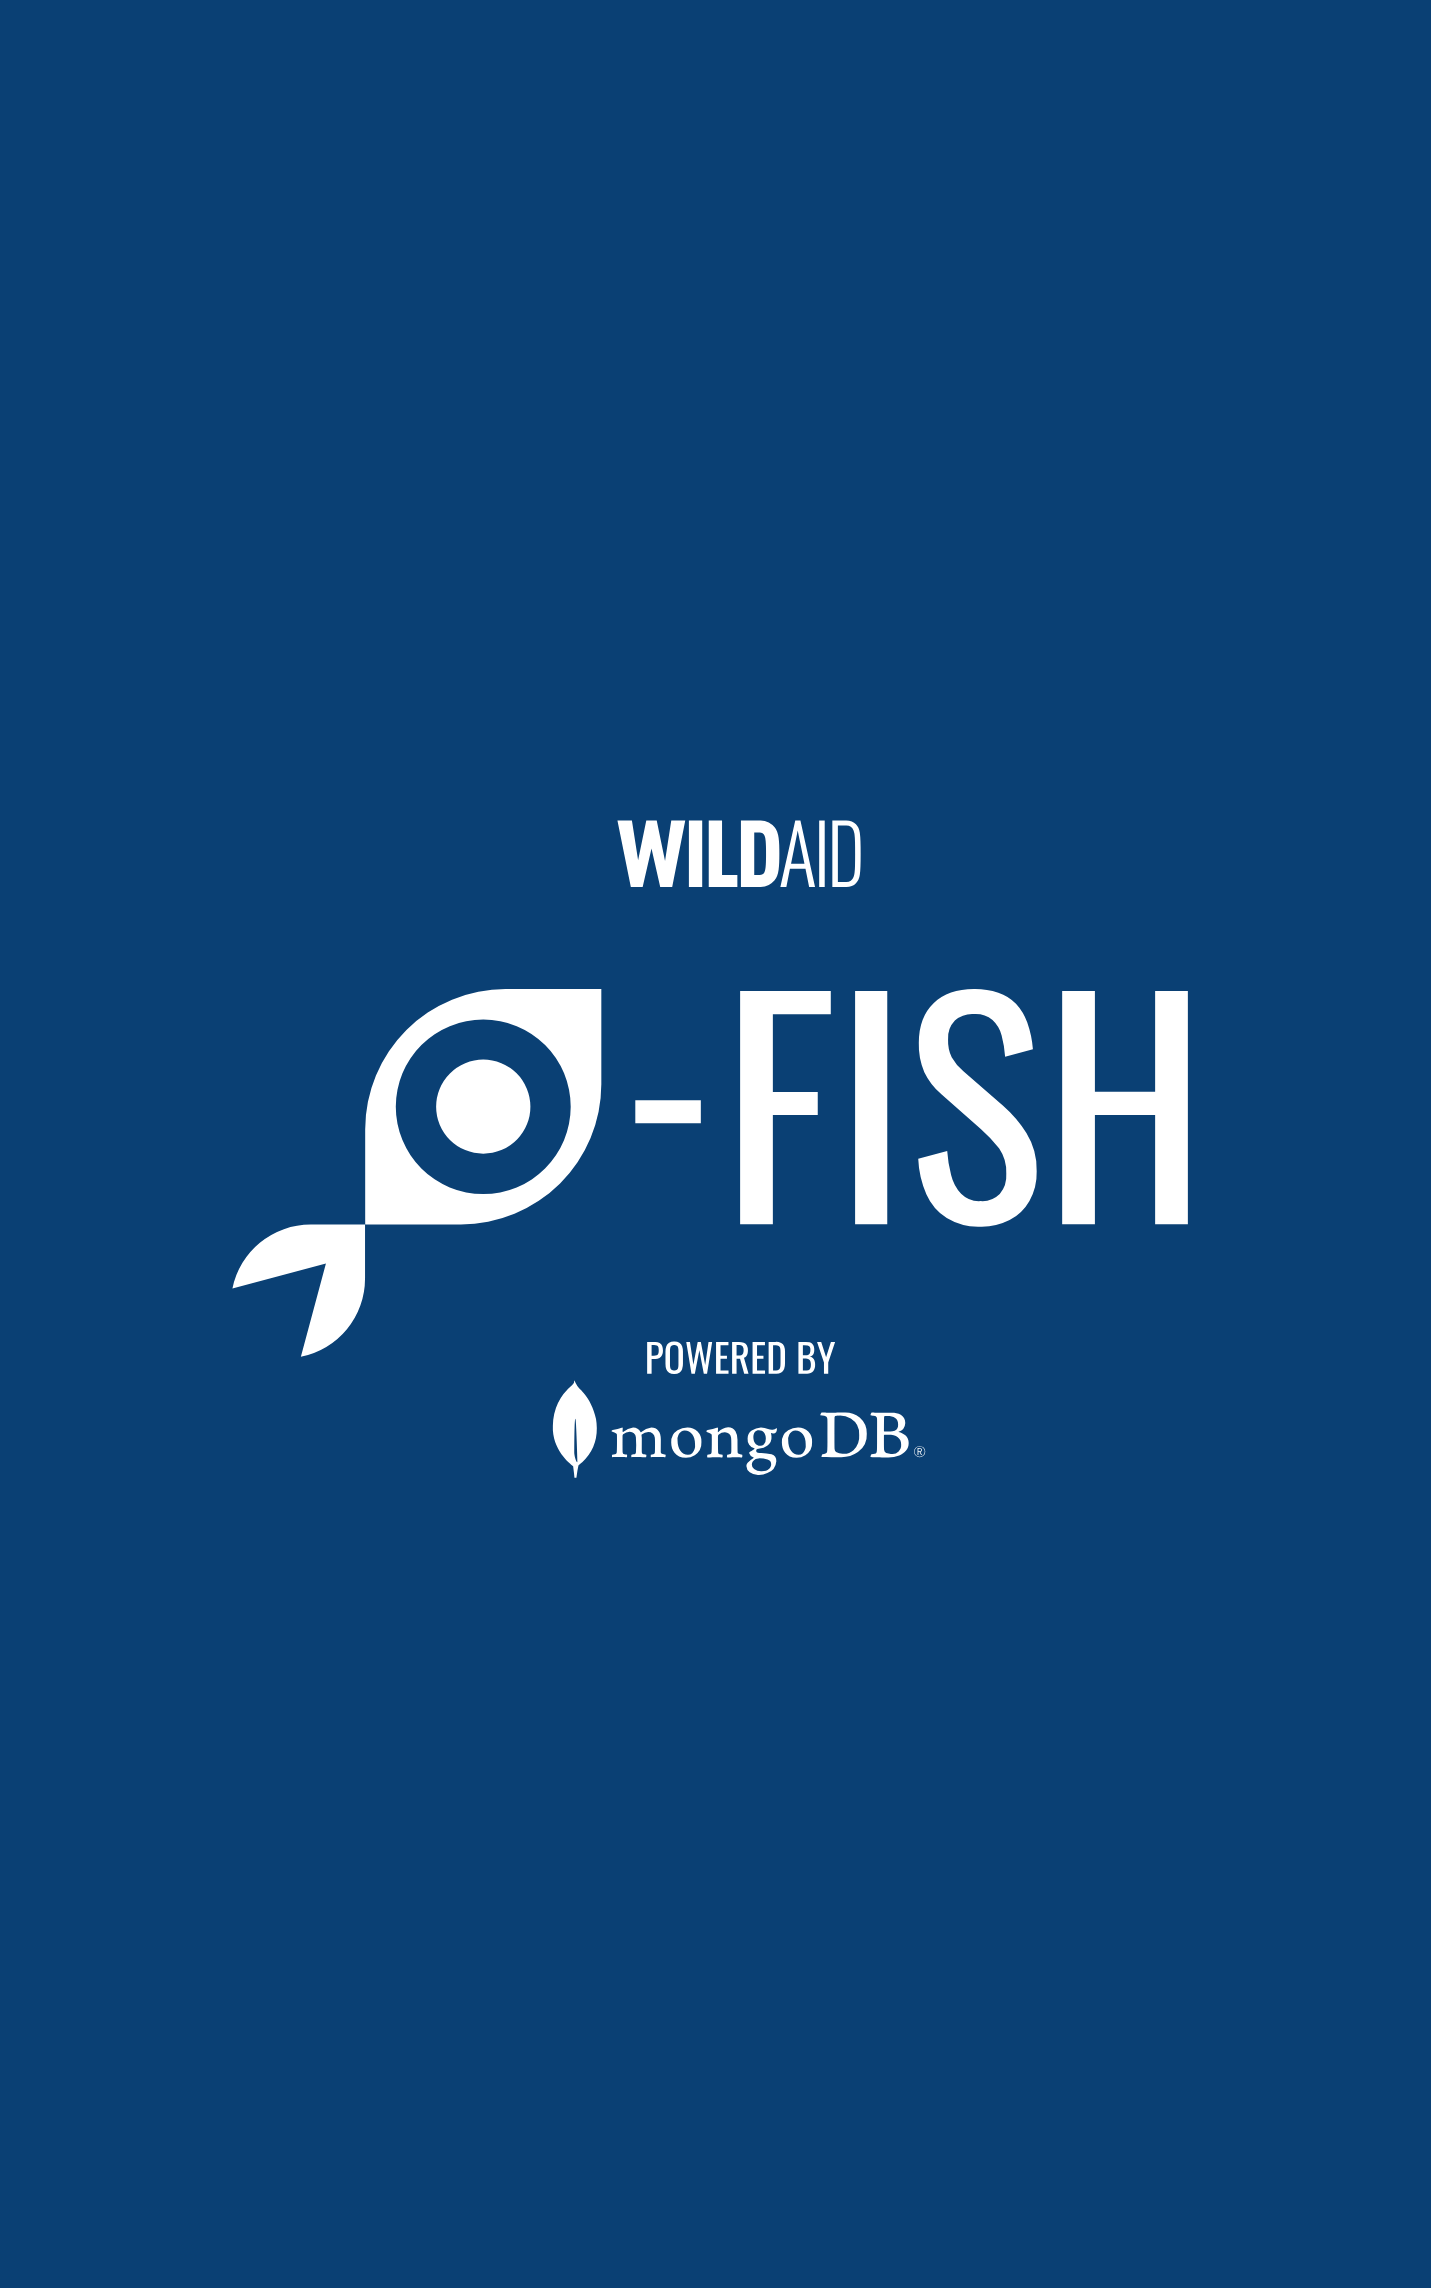 WildAid O-Fish, powered by mongoDB